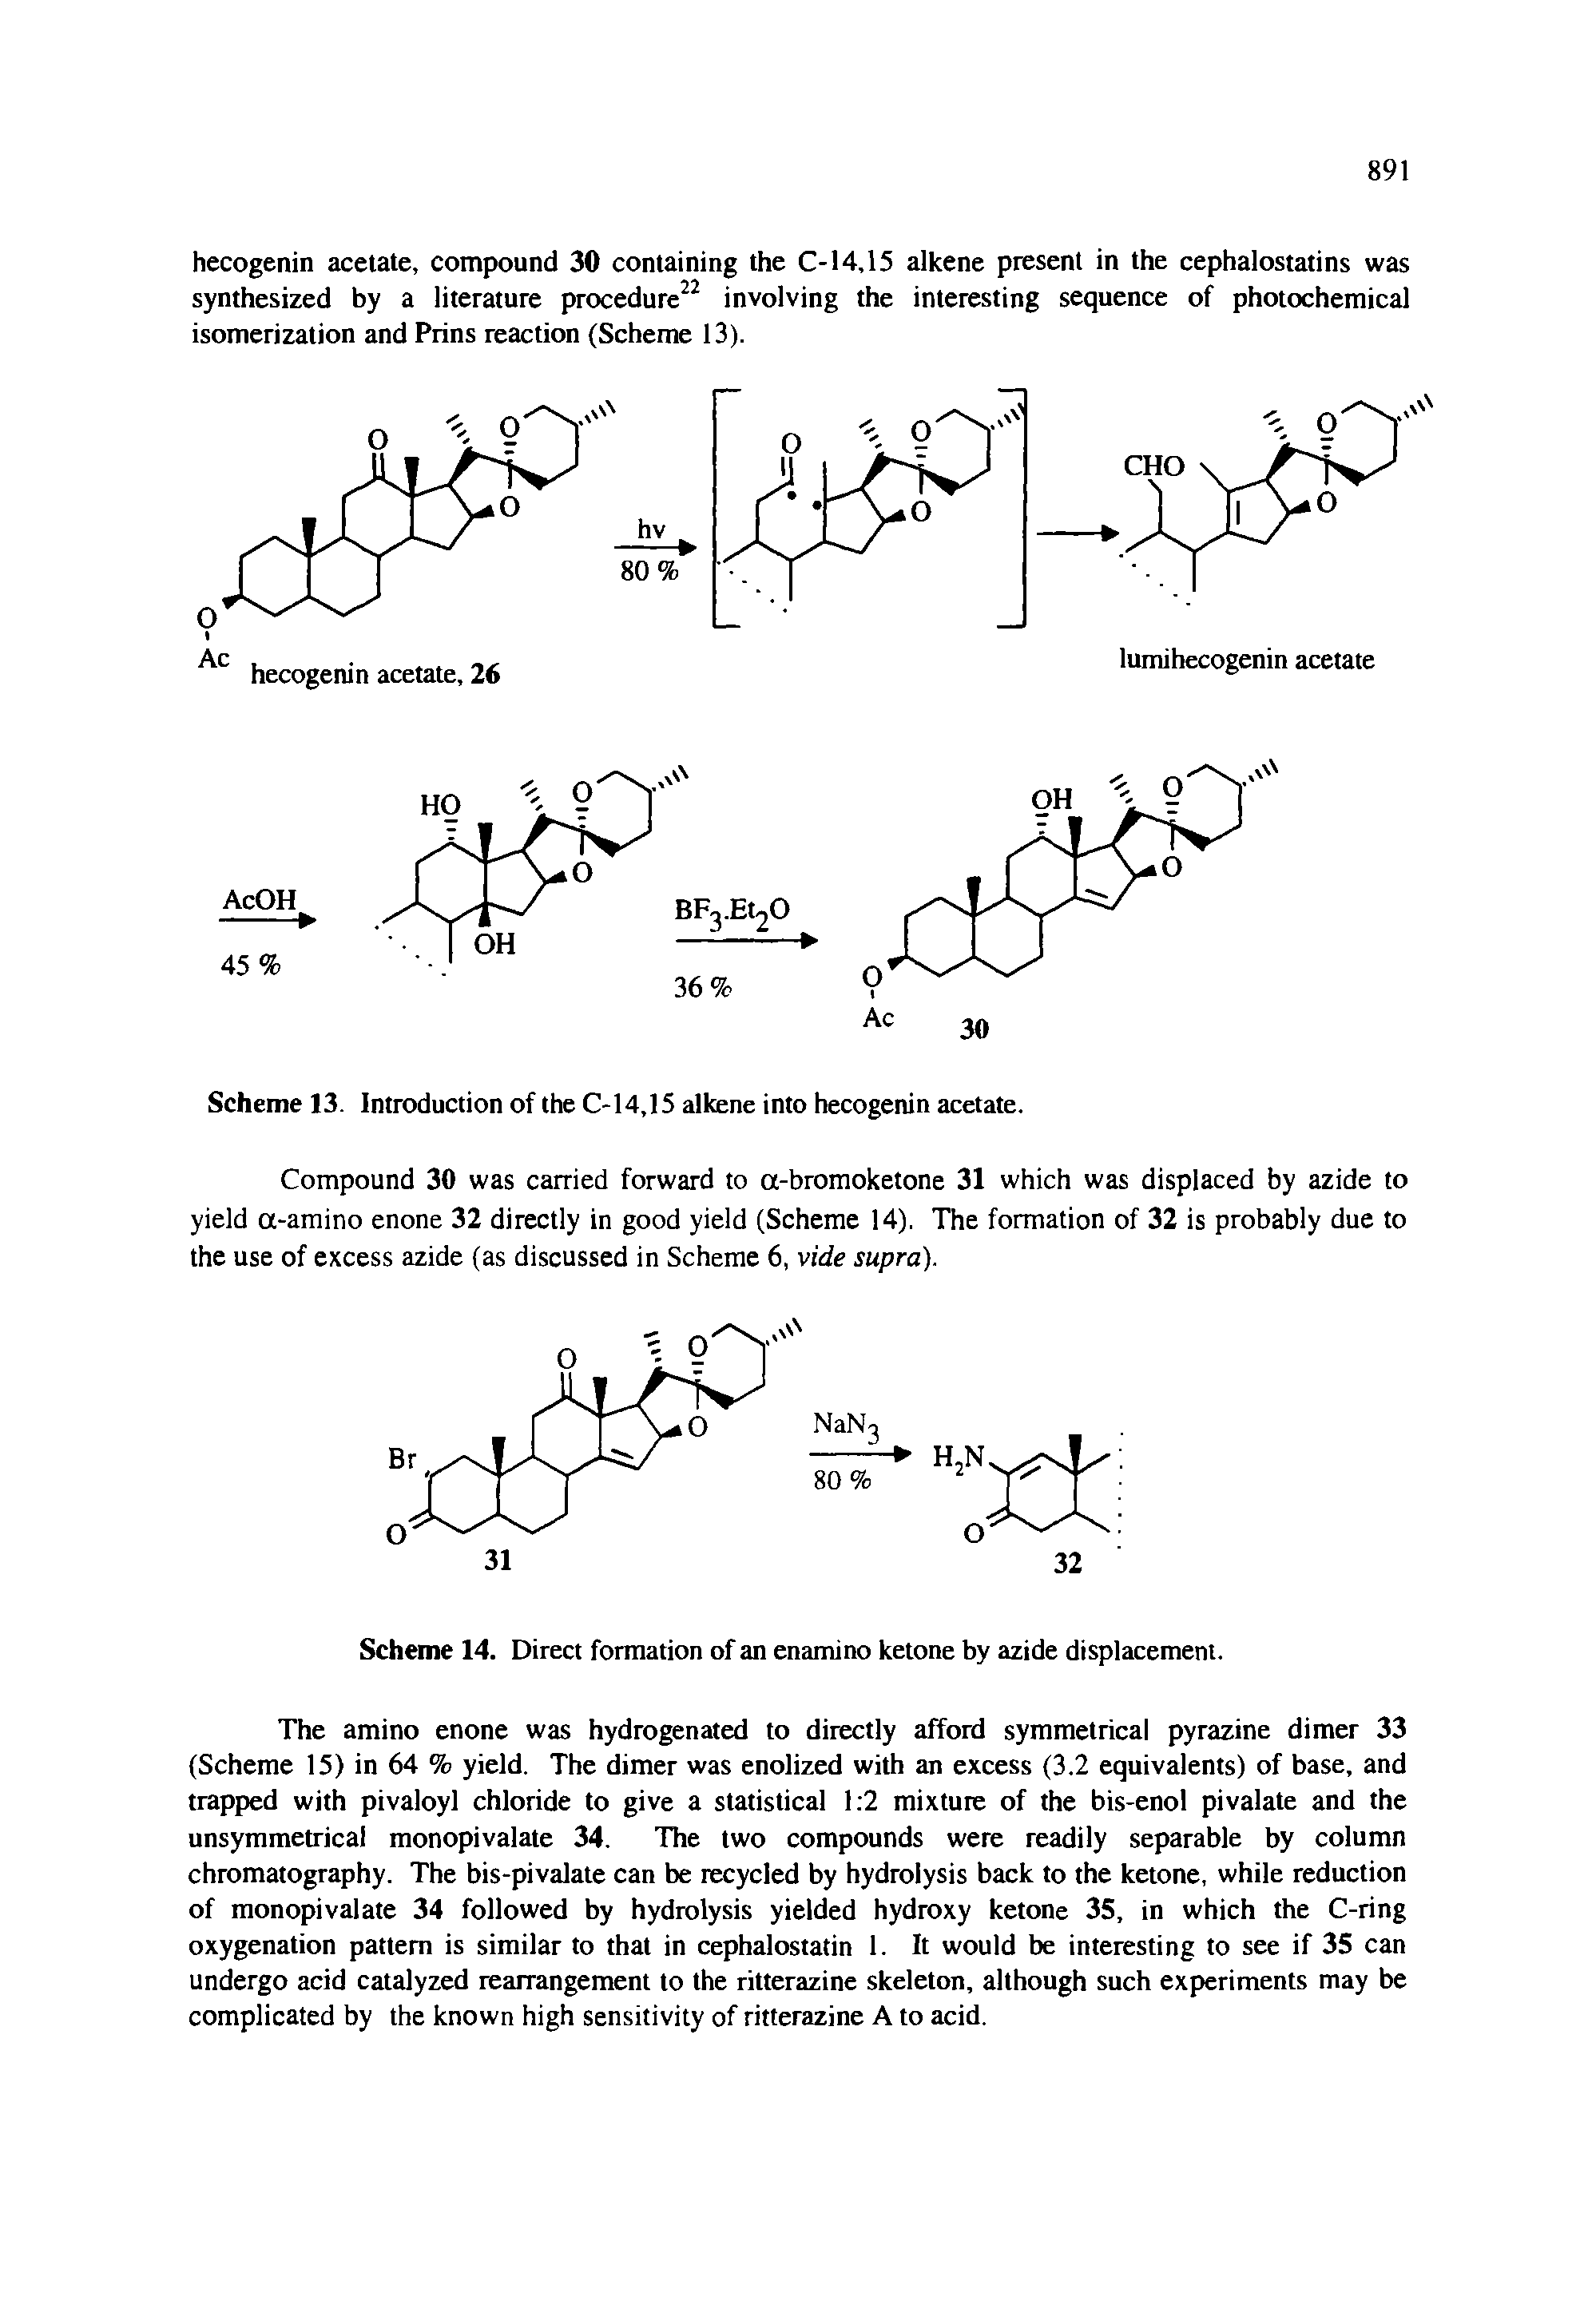 Scheme 13. Introduction of the C-14,15 alkene into hecogenin acetate.